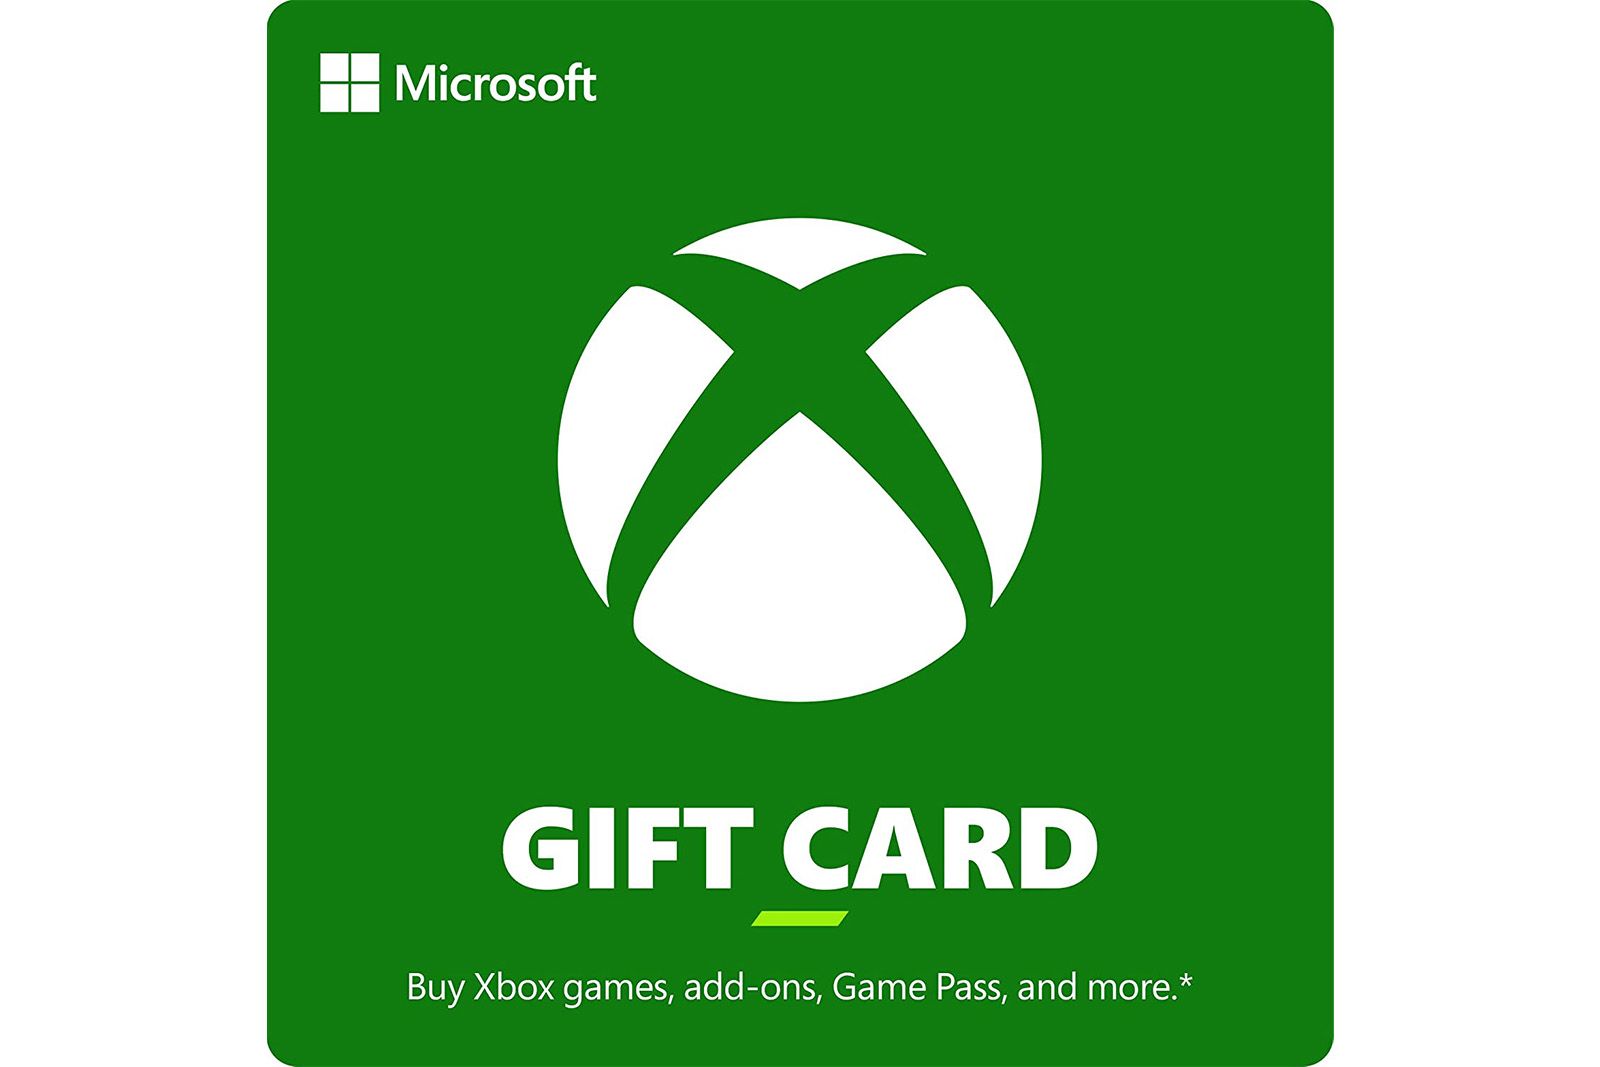 Xbox Gift Card